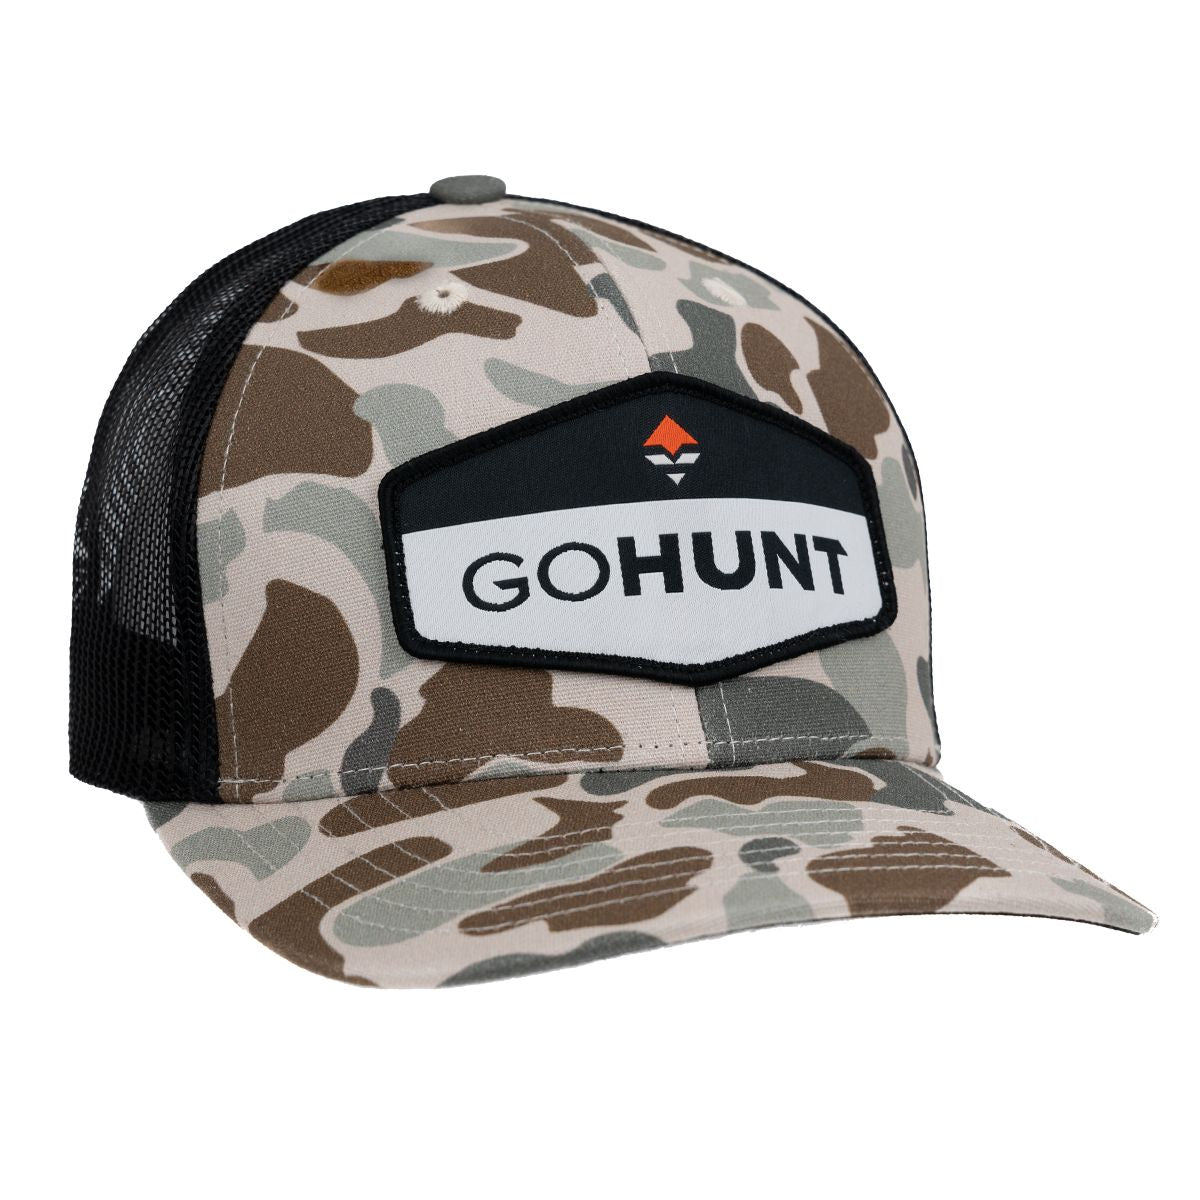 GOHUNT Trail Blaze in Camo by GOHUNT | GOHUNT - GOHUNT Shop